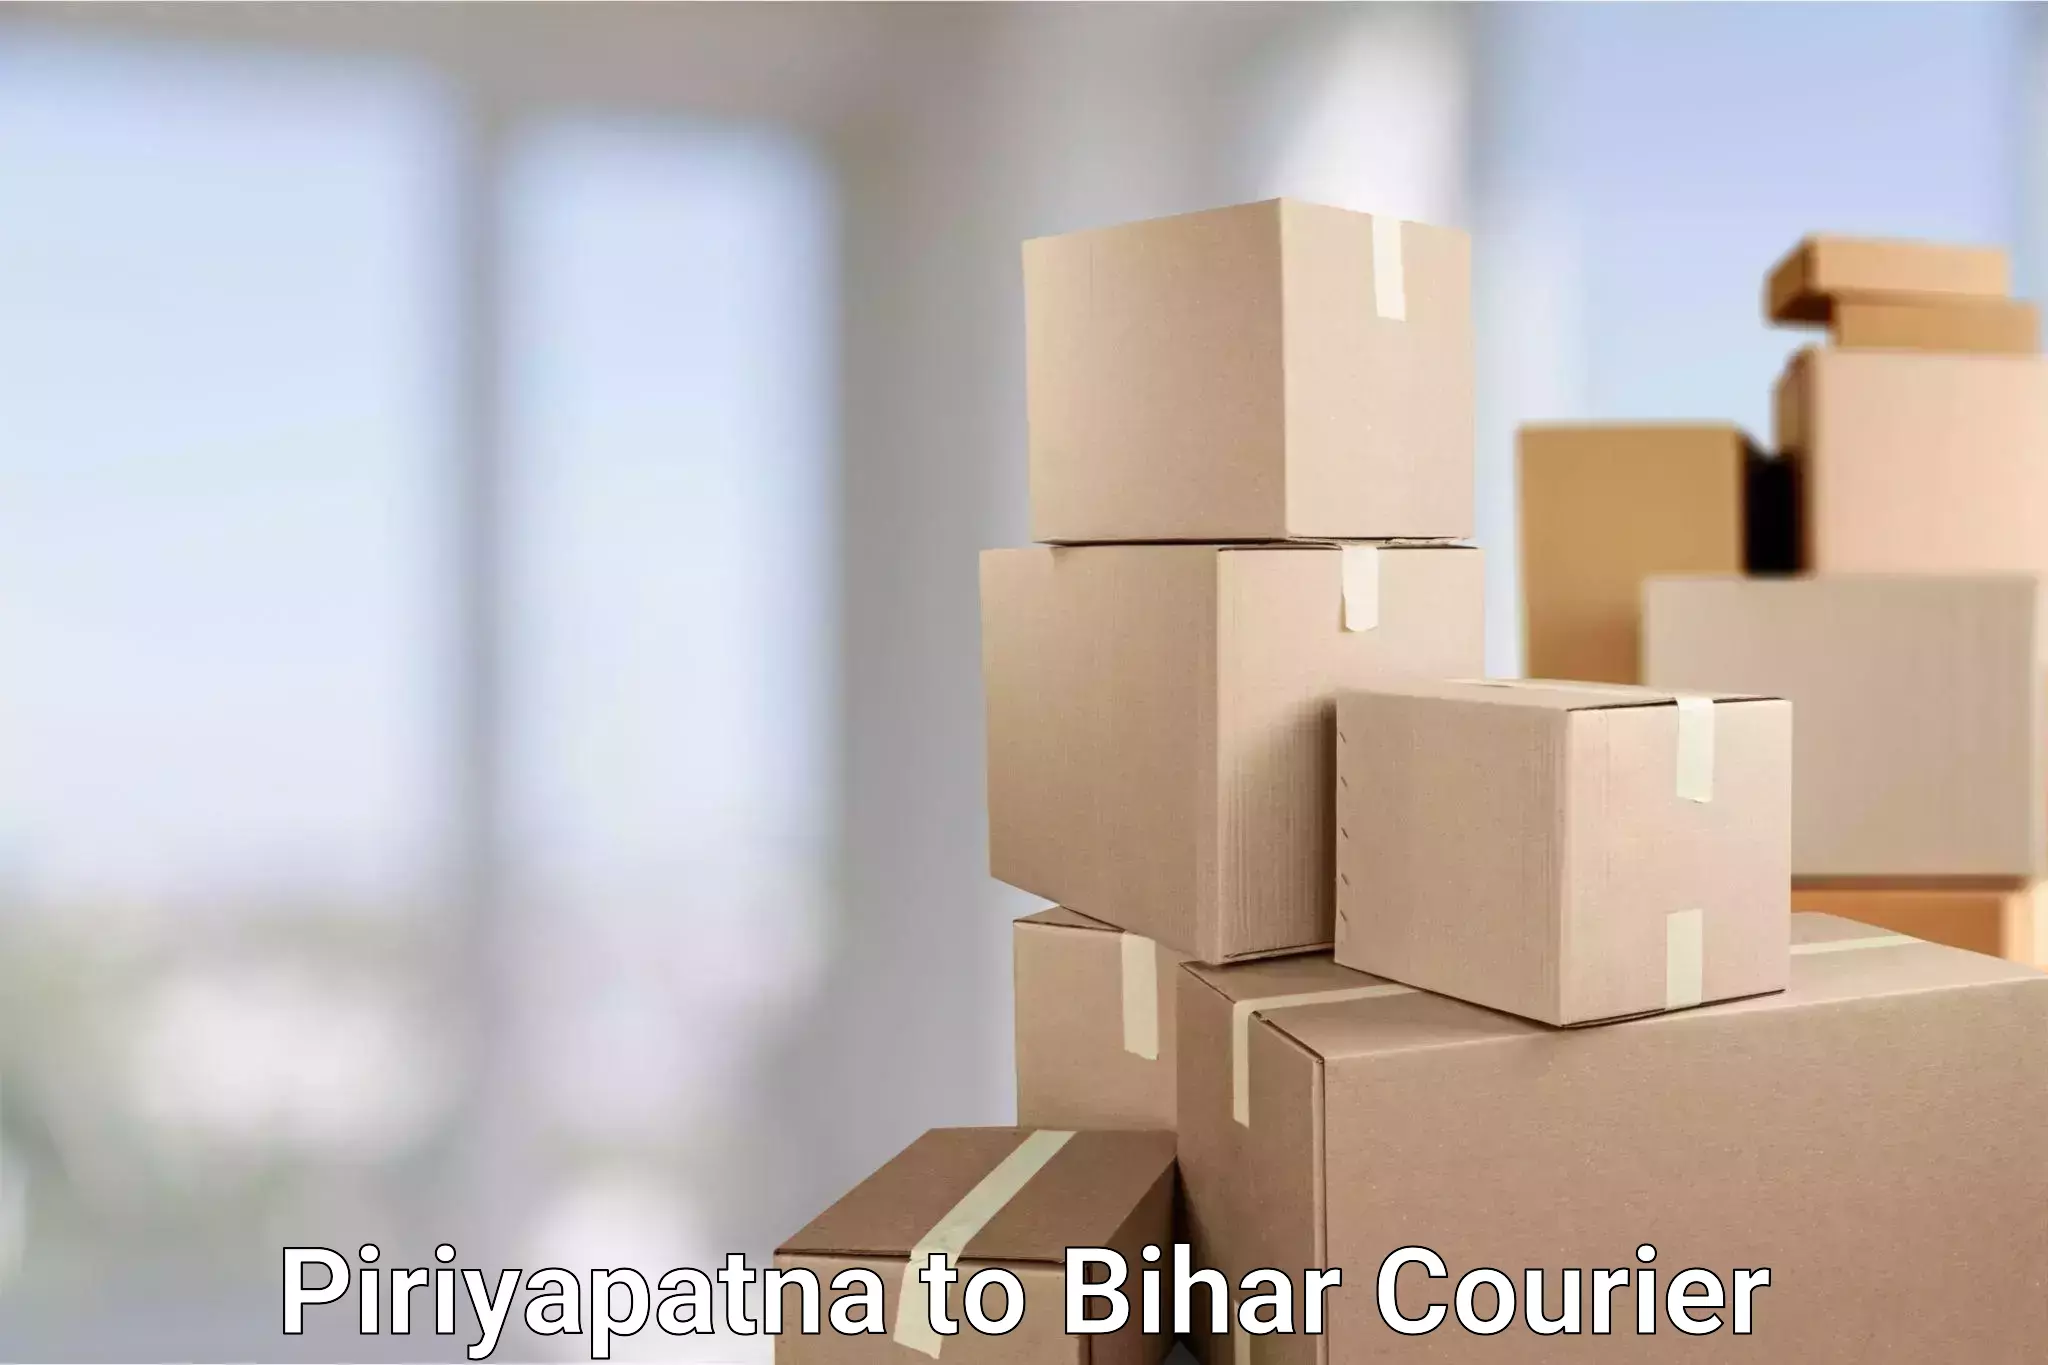 Reliable delivery network Piriyapatna to Aurangabad Bihar